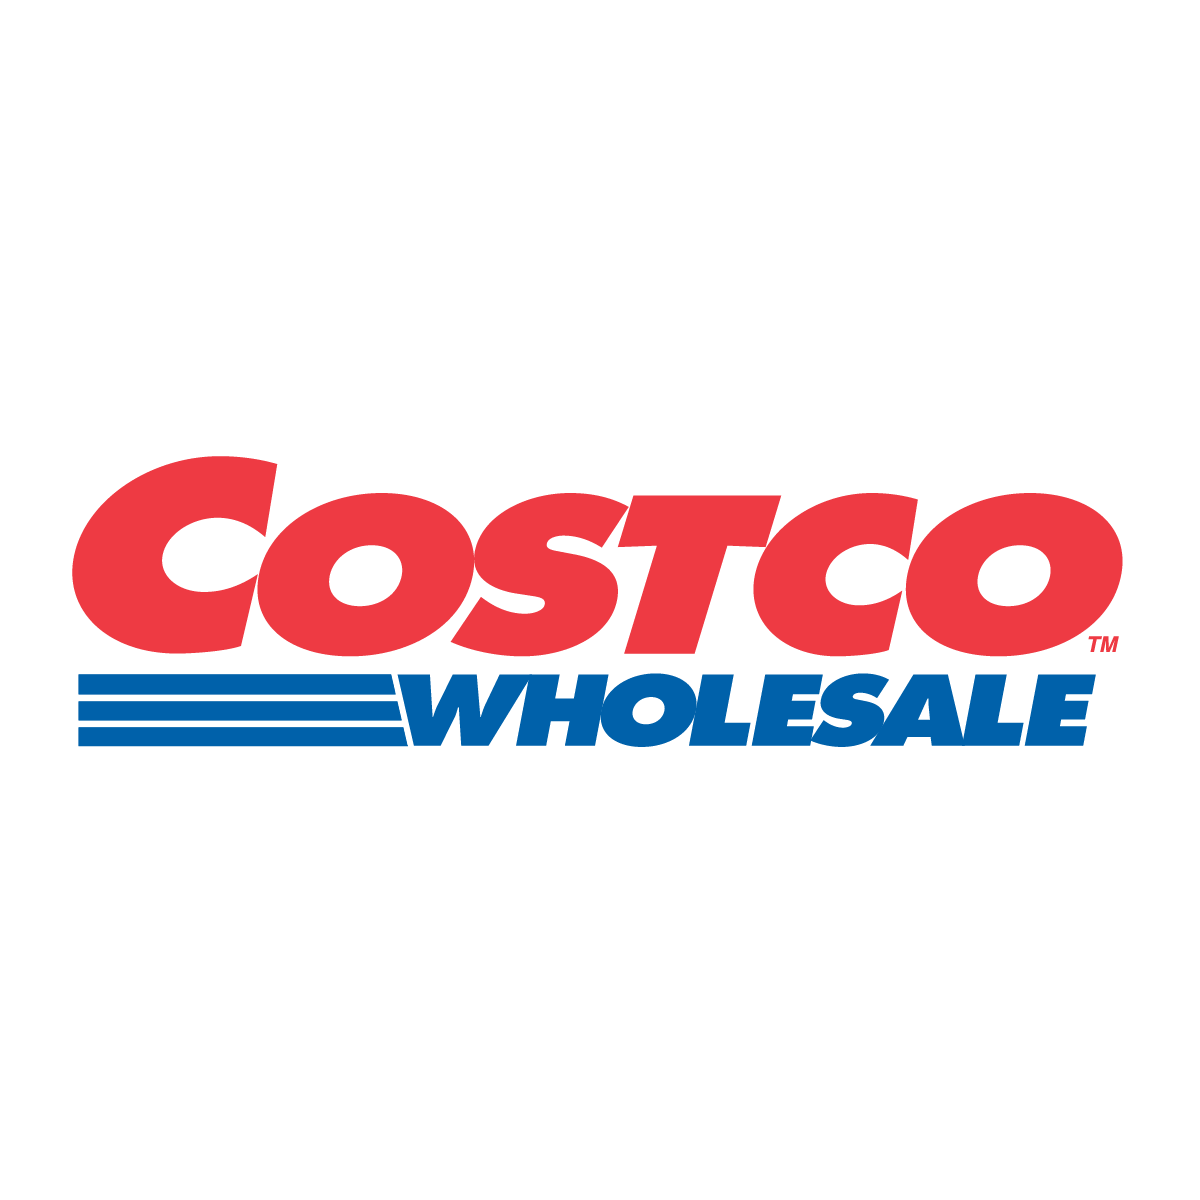 Costco Wholesale - Fresh Alliance Website_Artboard 1.png